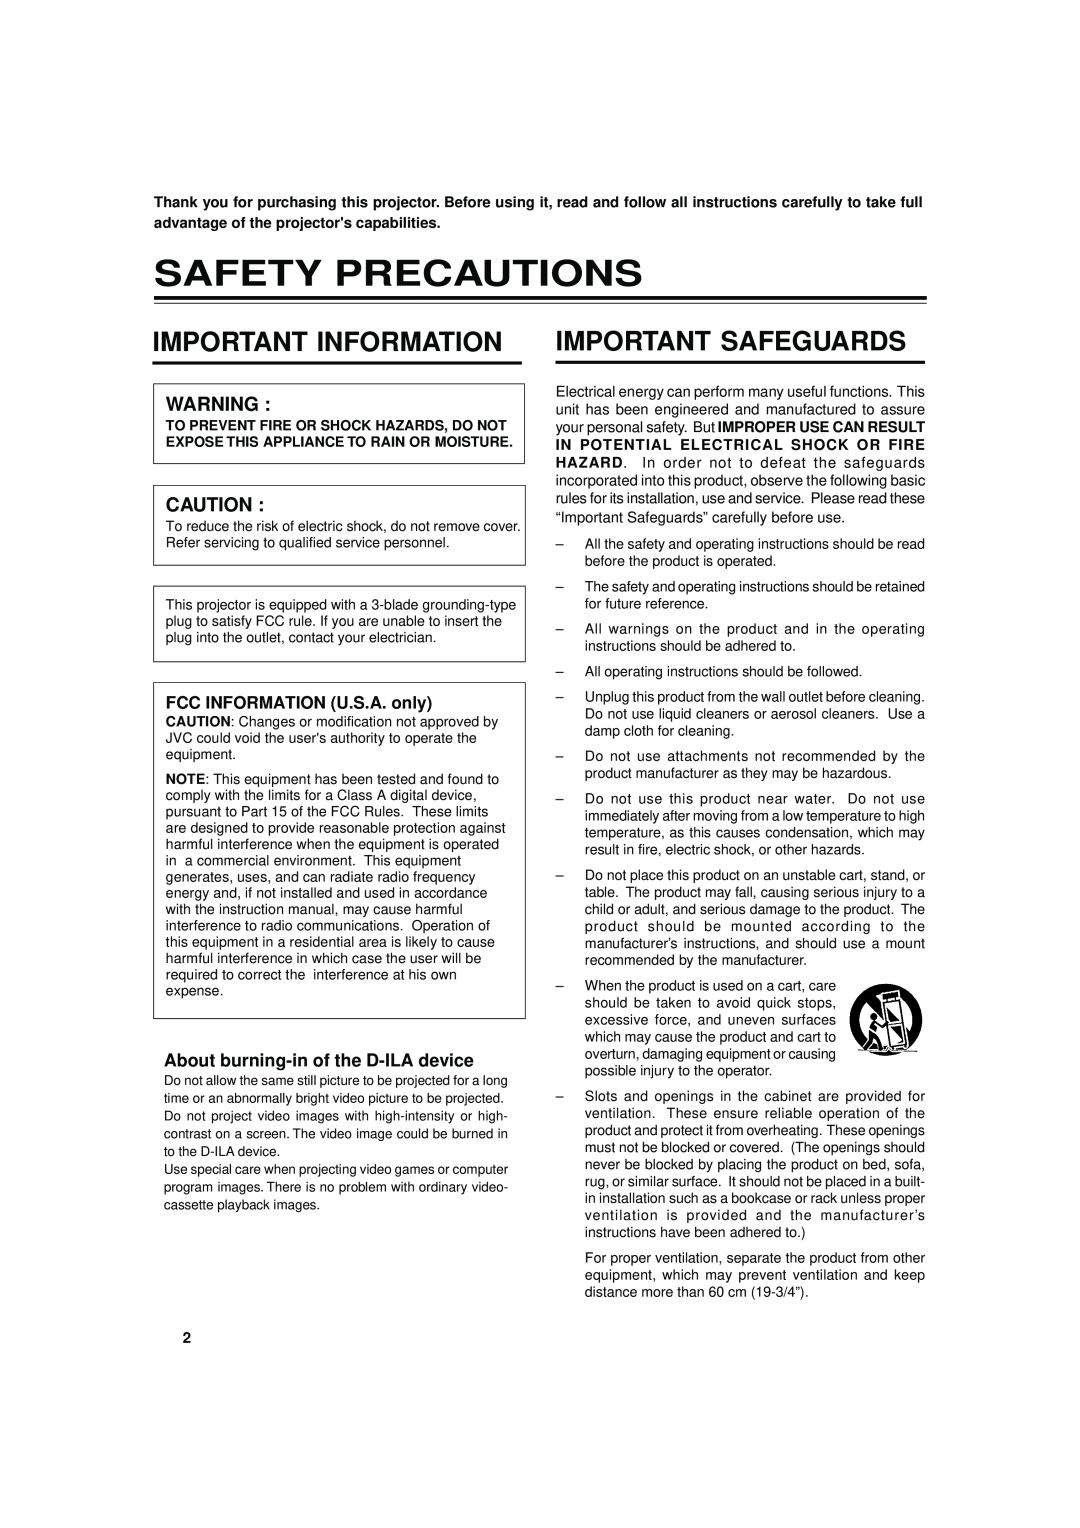 JVC DLA-M5000SCU, DLA-M5000LU Safety Precautions, Important Information Important Safeguards, FCC INFORMATION U.S.A. only 